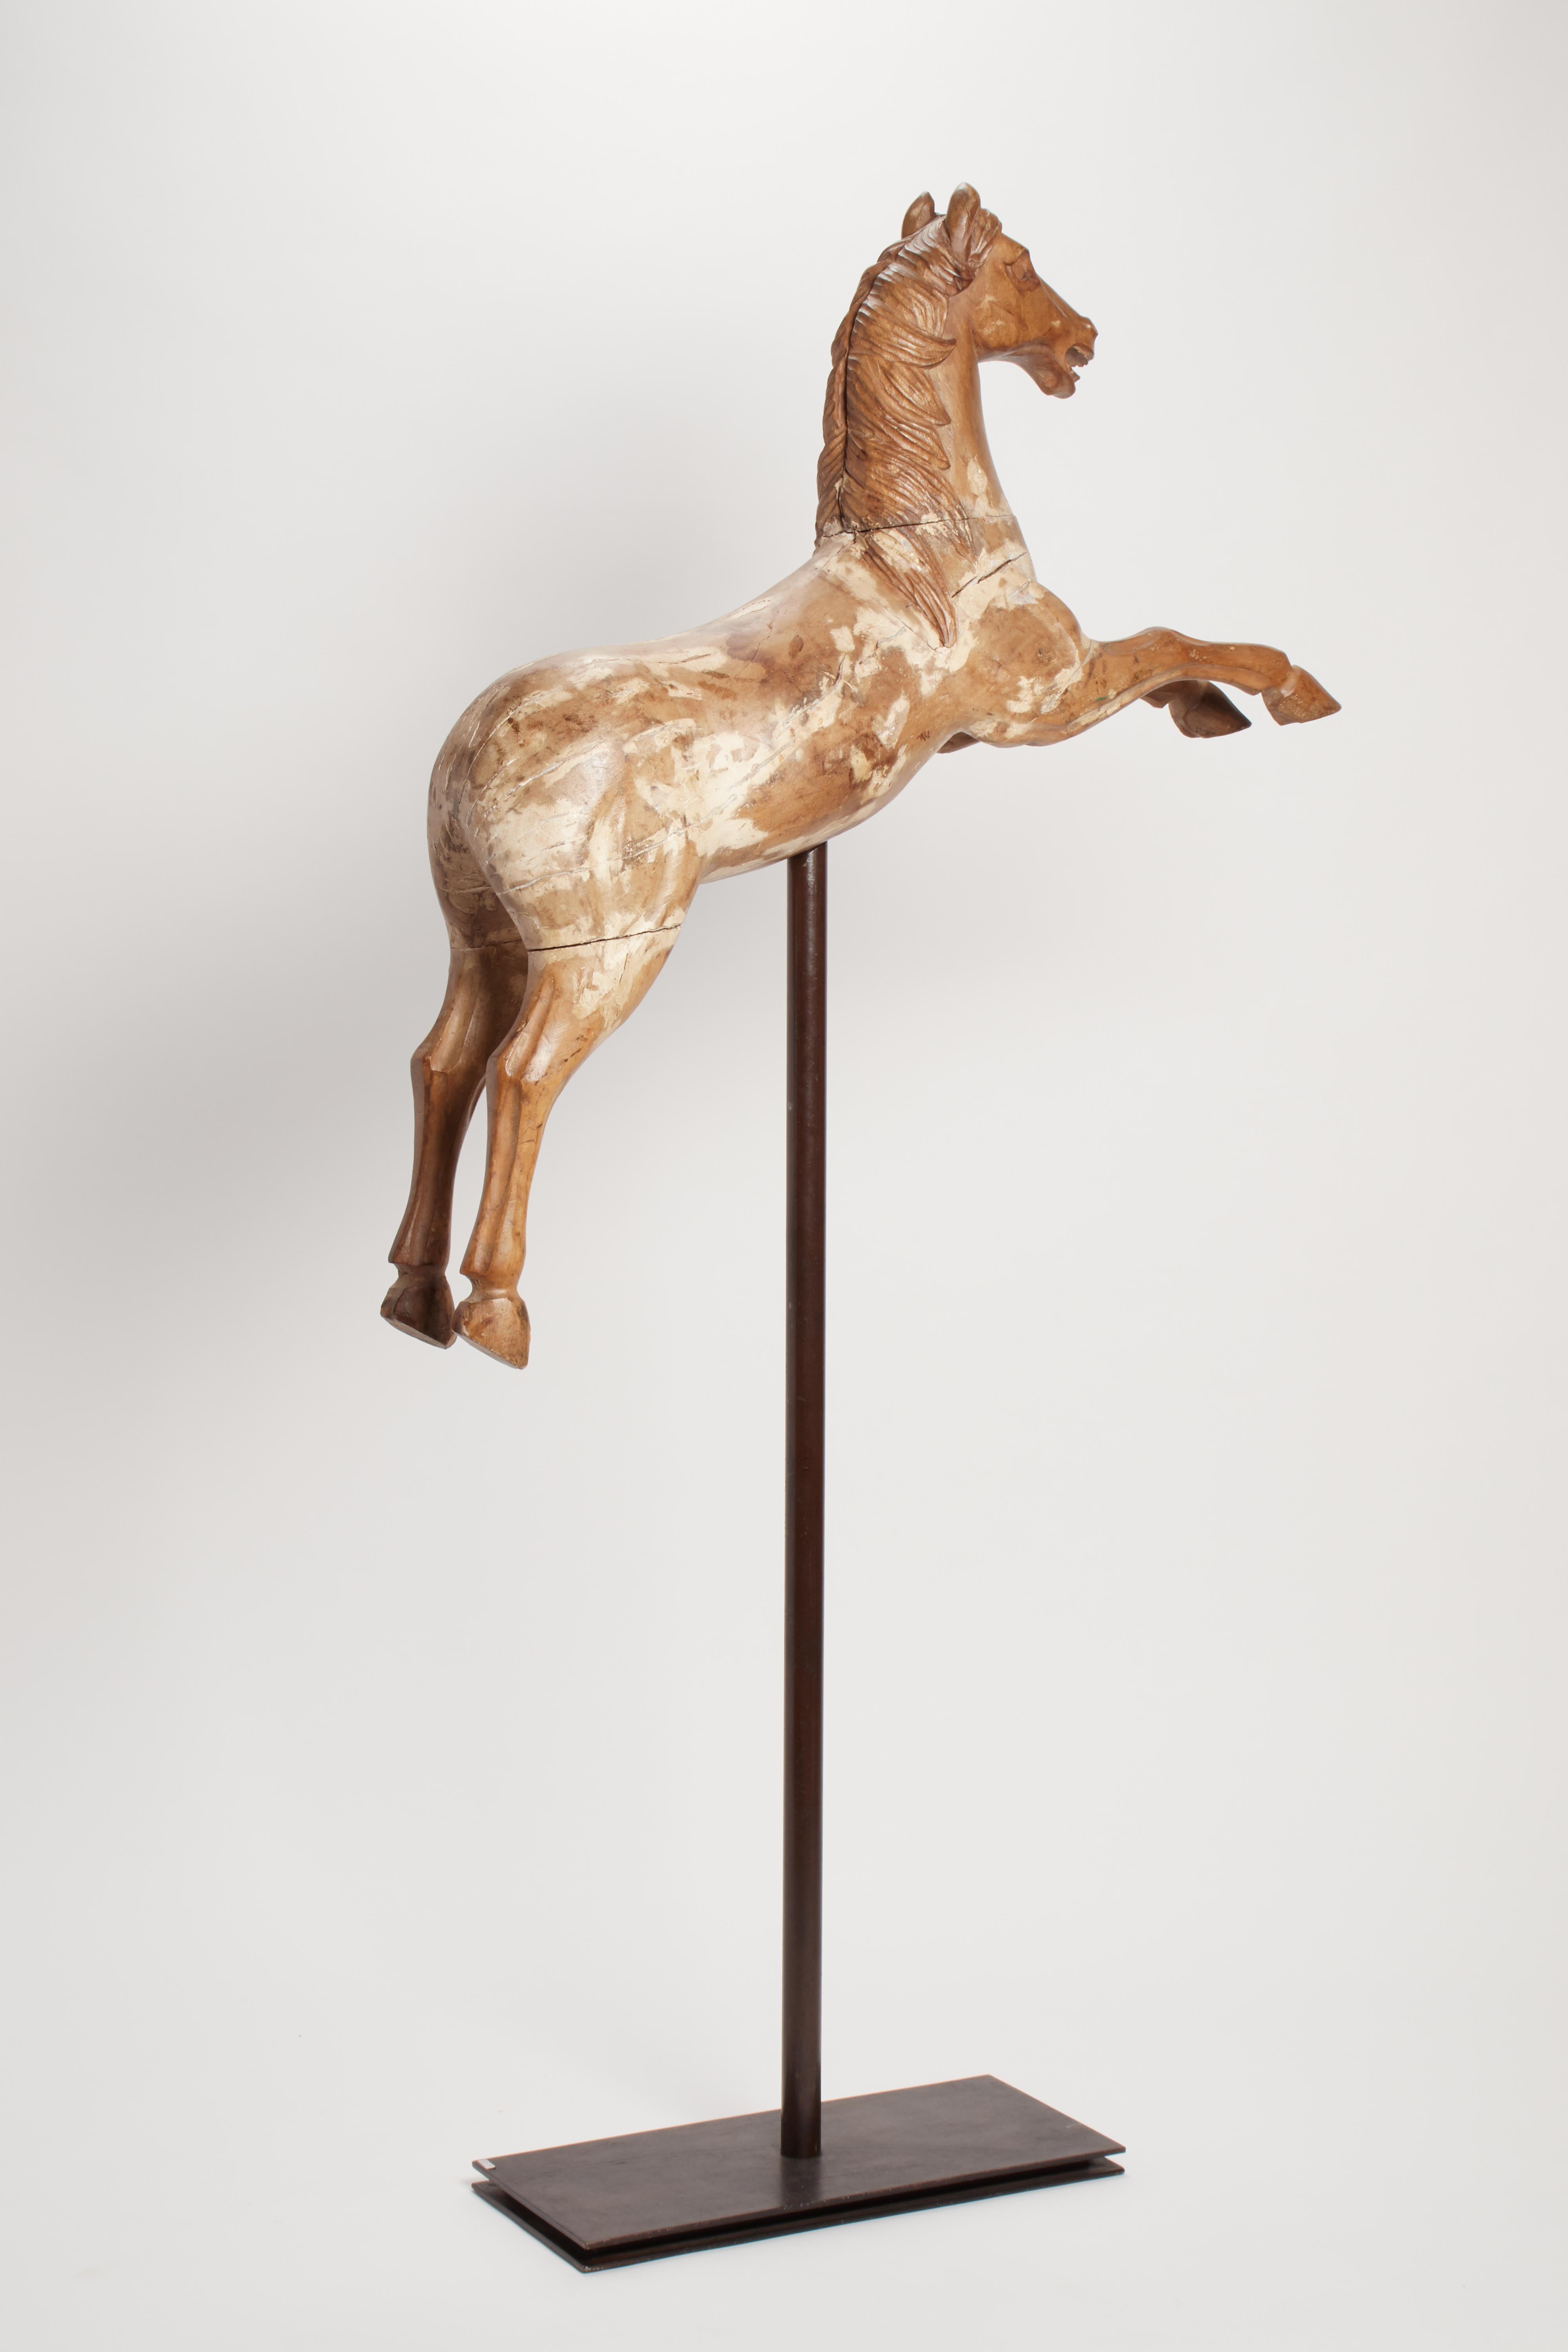 Italian Wooden Sculpture of a Rampant Carrousel Horse, Italy, 1750